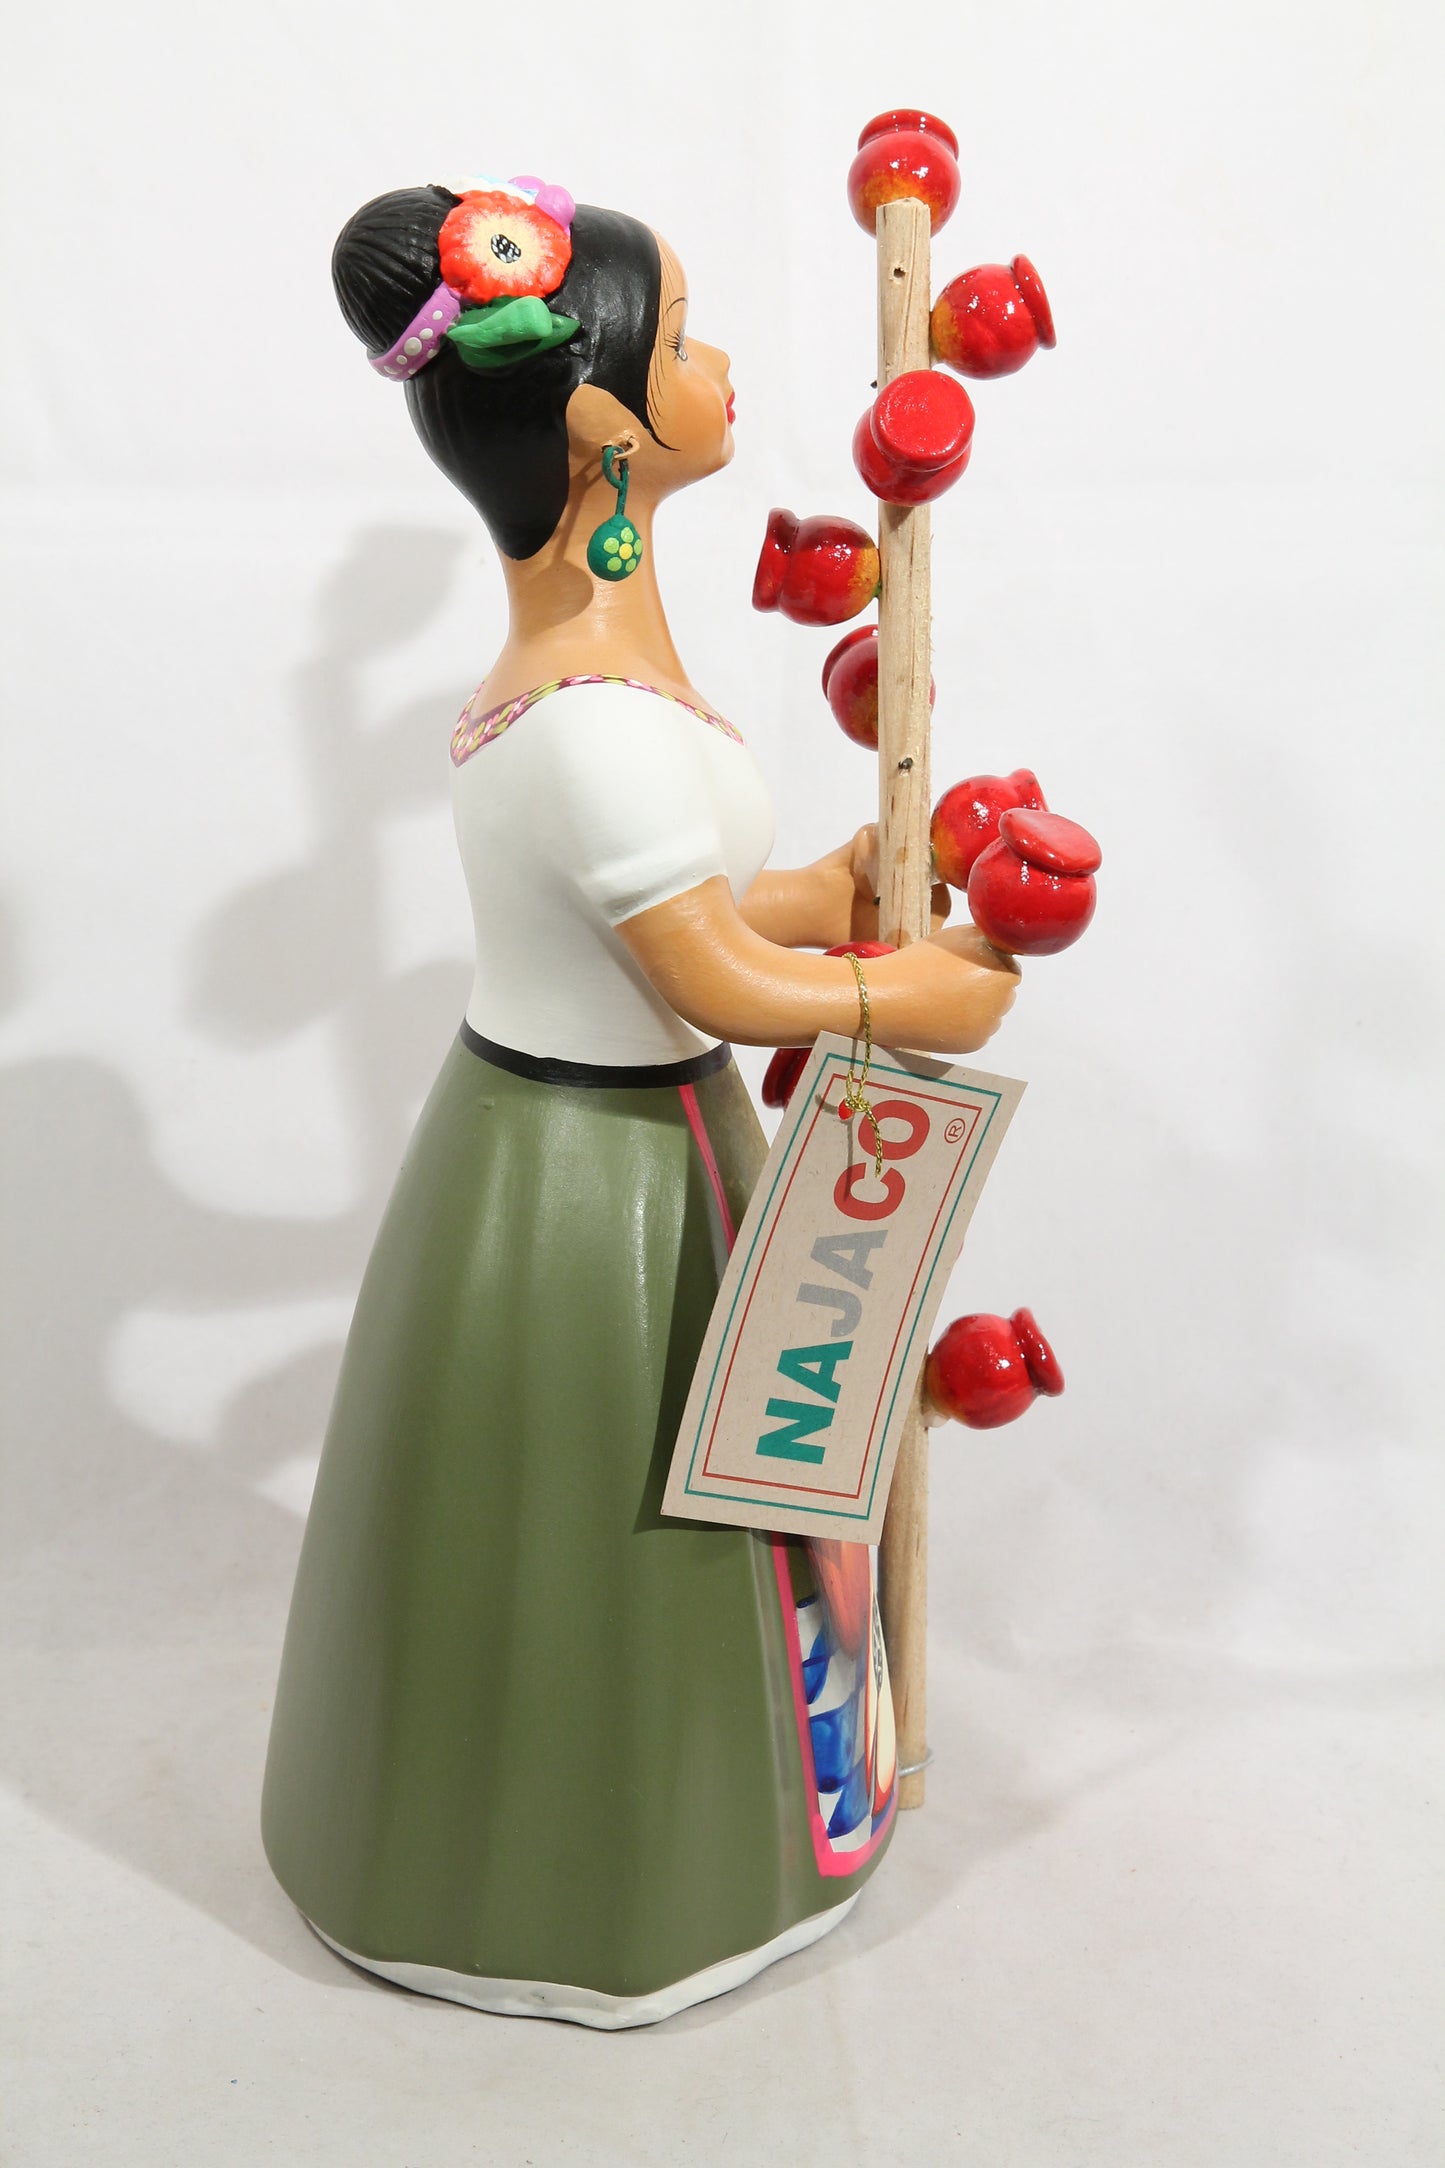 Lupita Doll Candy Apple Seller Olive Dress Ceramic Mexico Folk Art